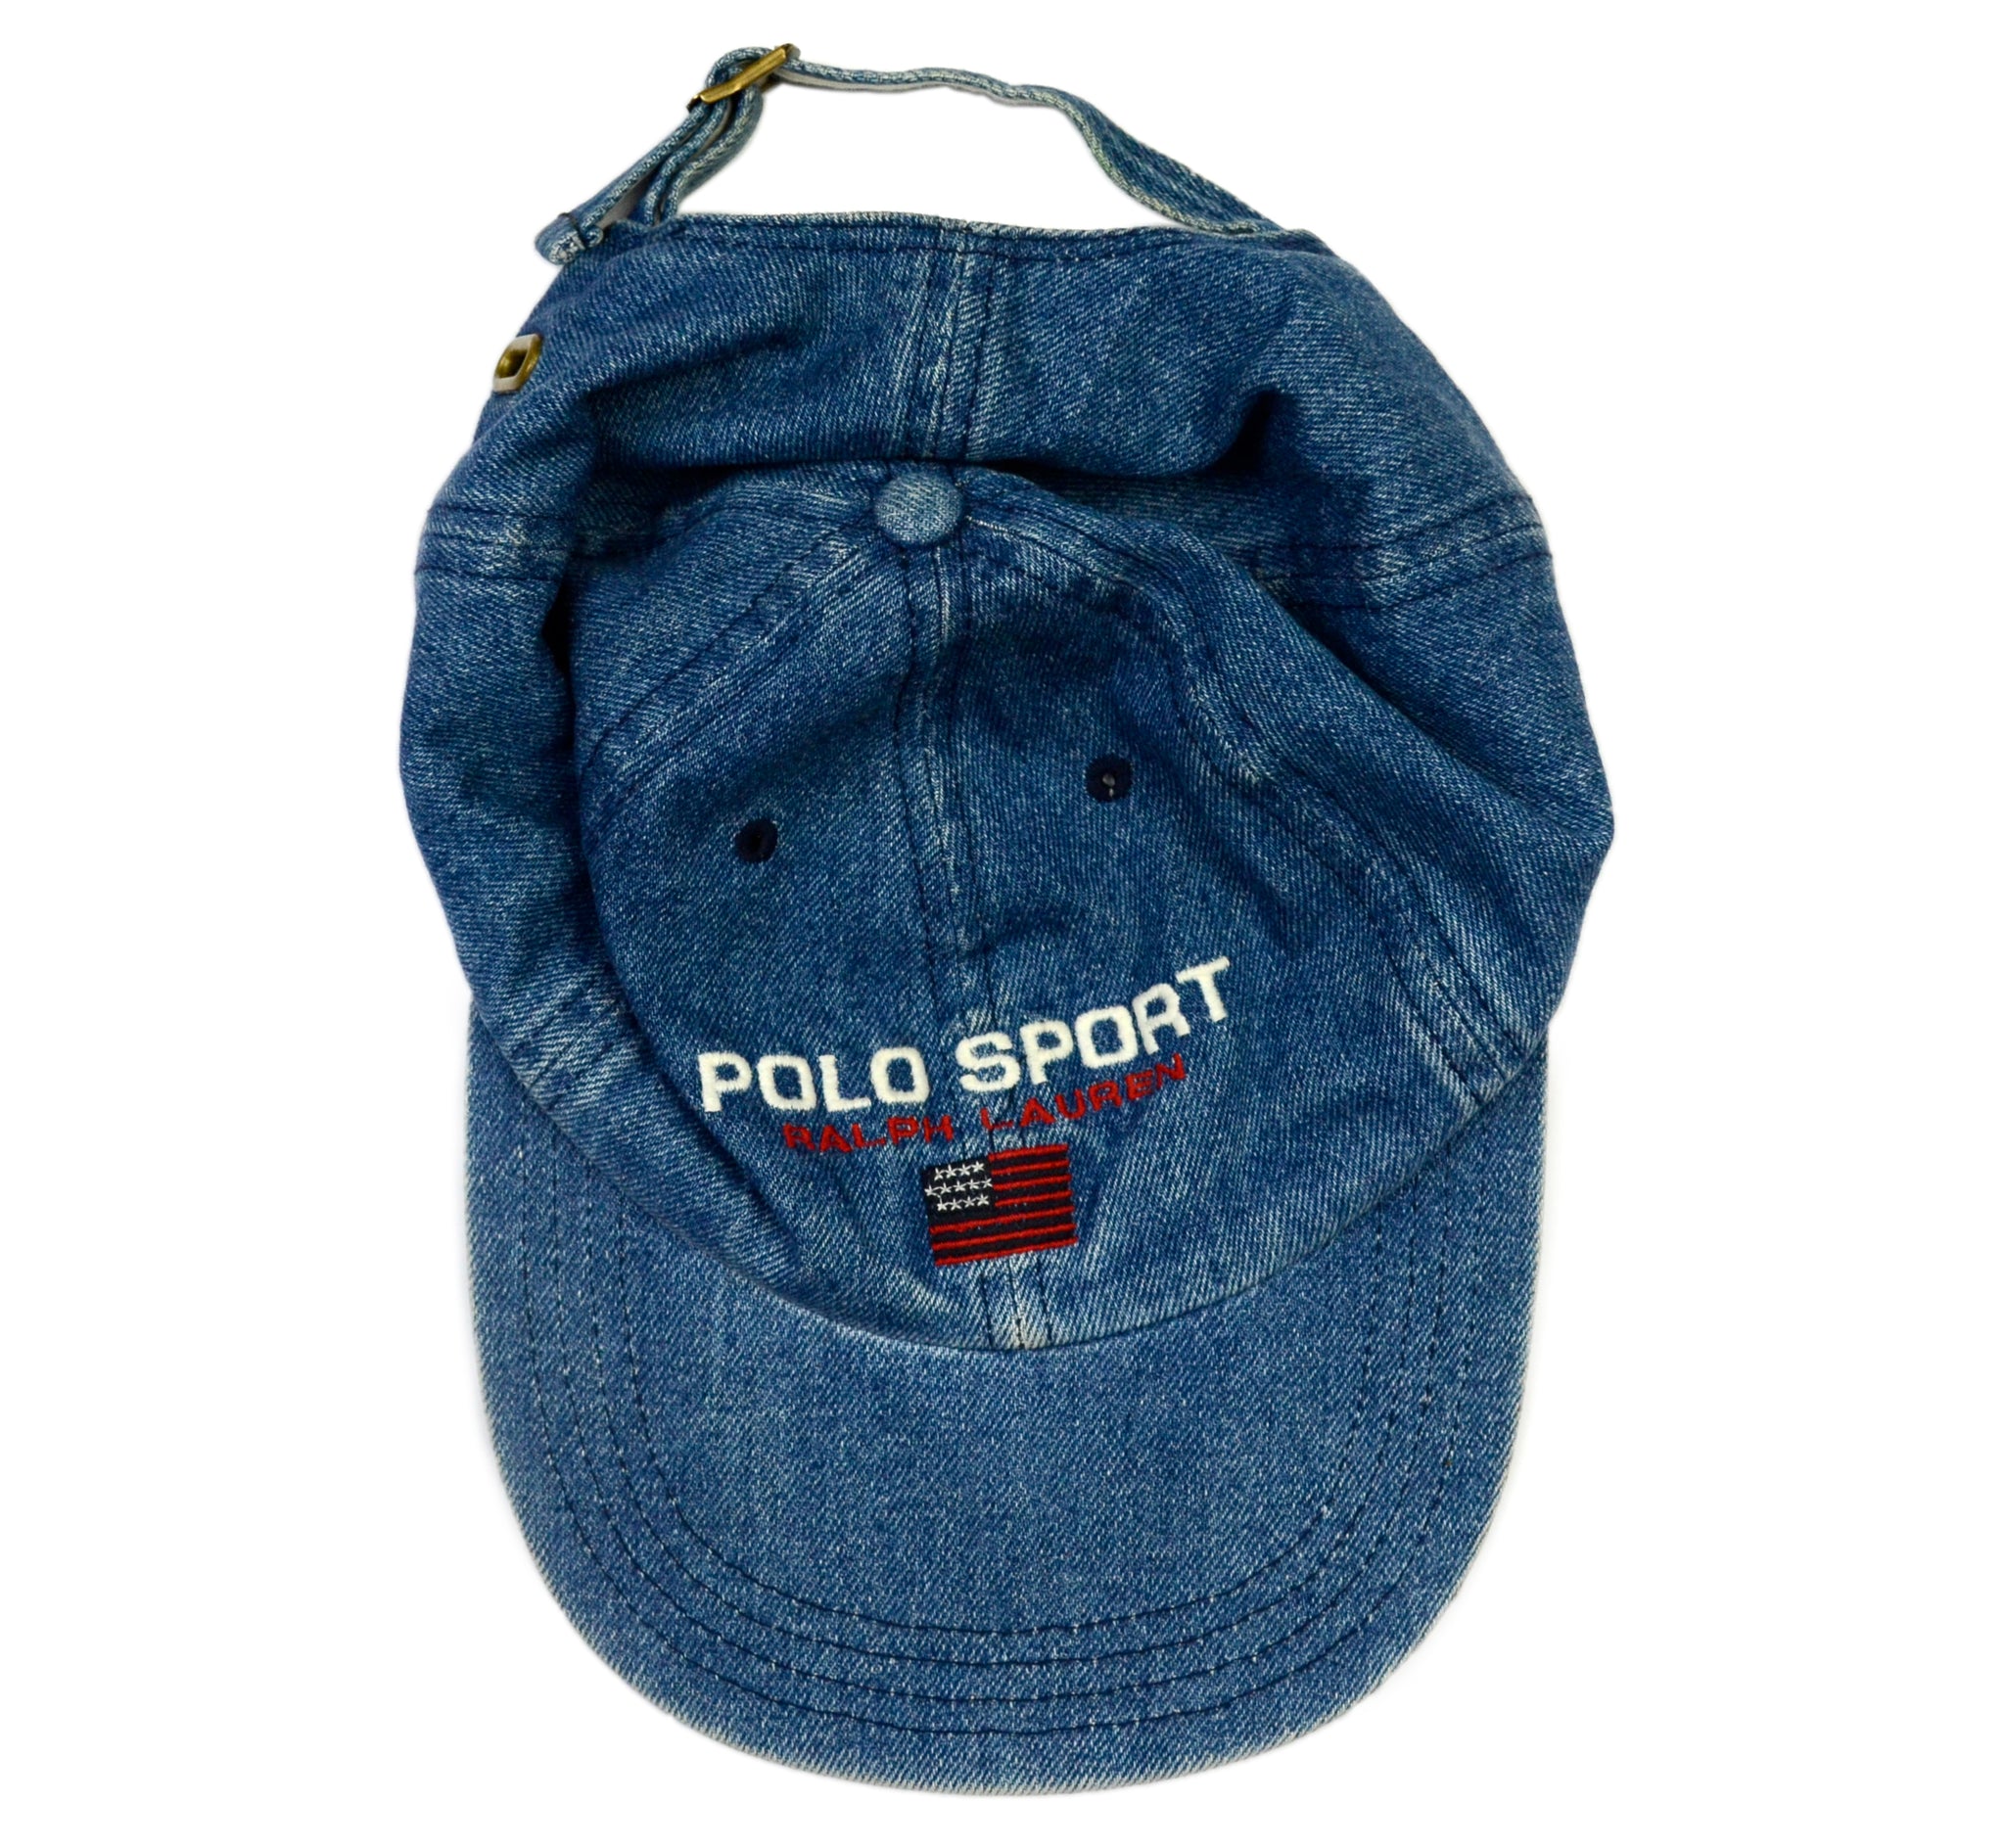 Vintage Polo Sport Denim Hat